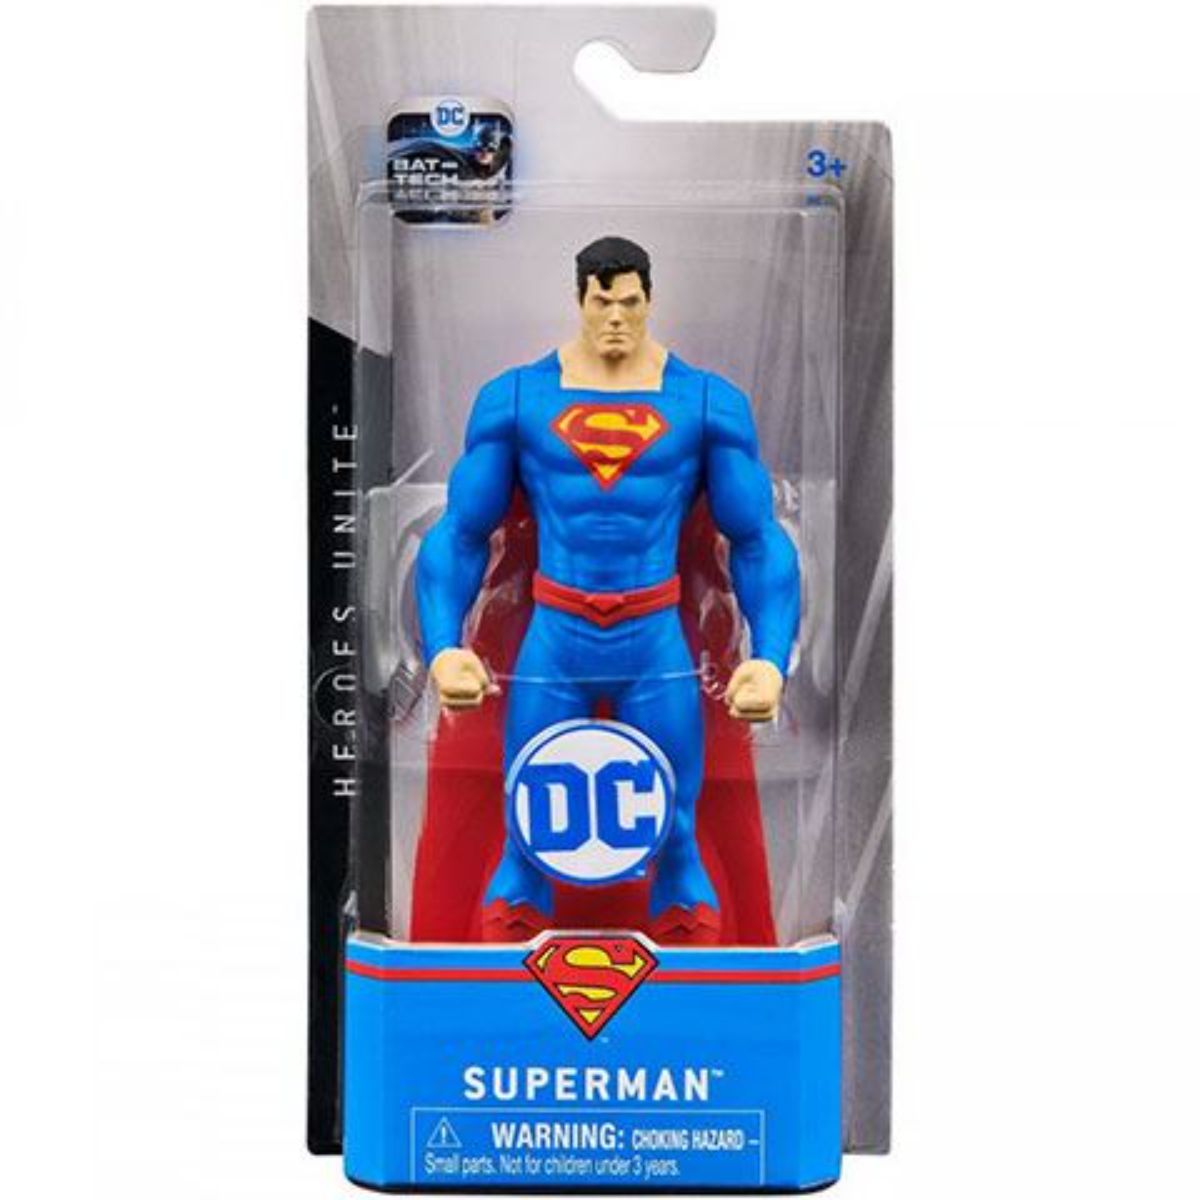 Figurina articulata Batman, Superman, 15 cm, 20132860